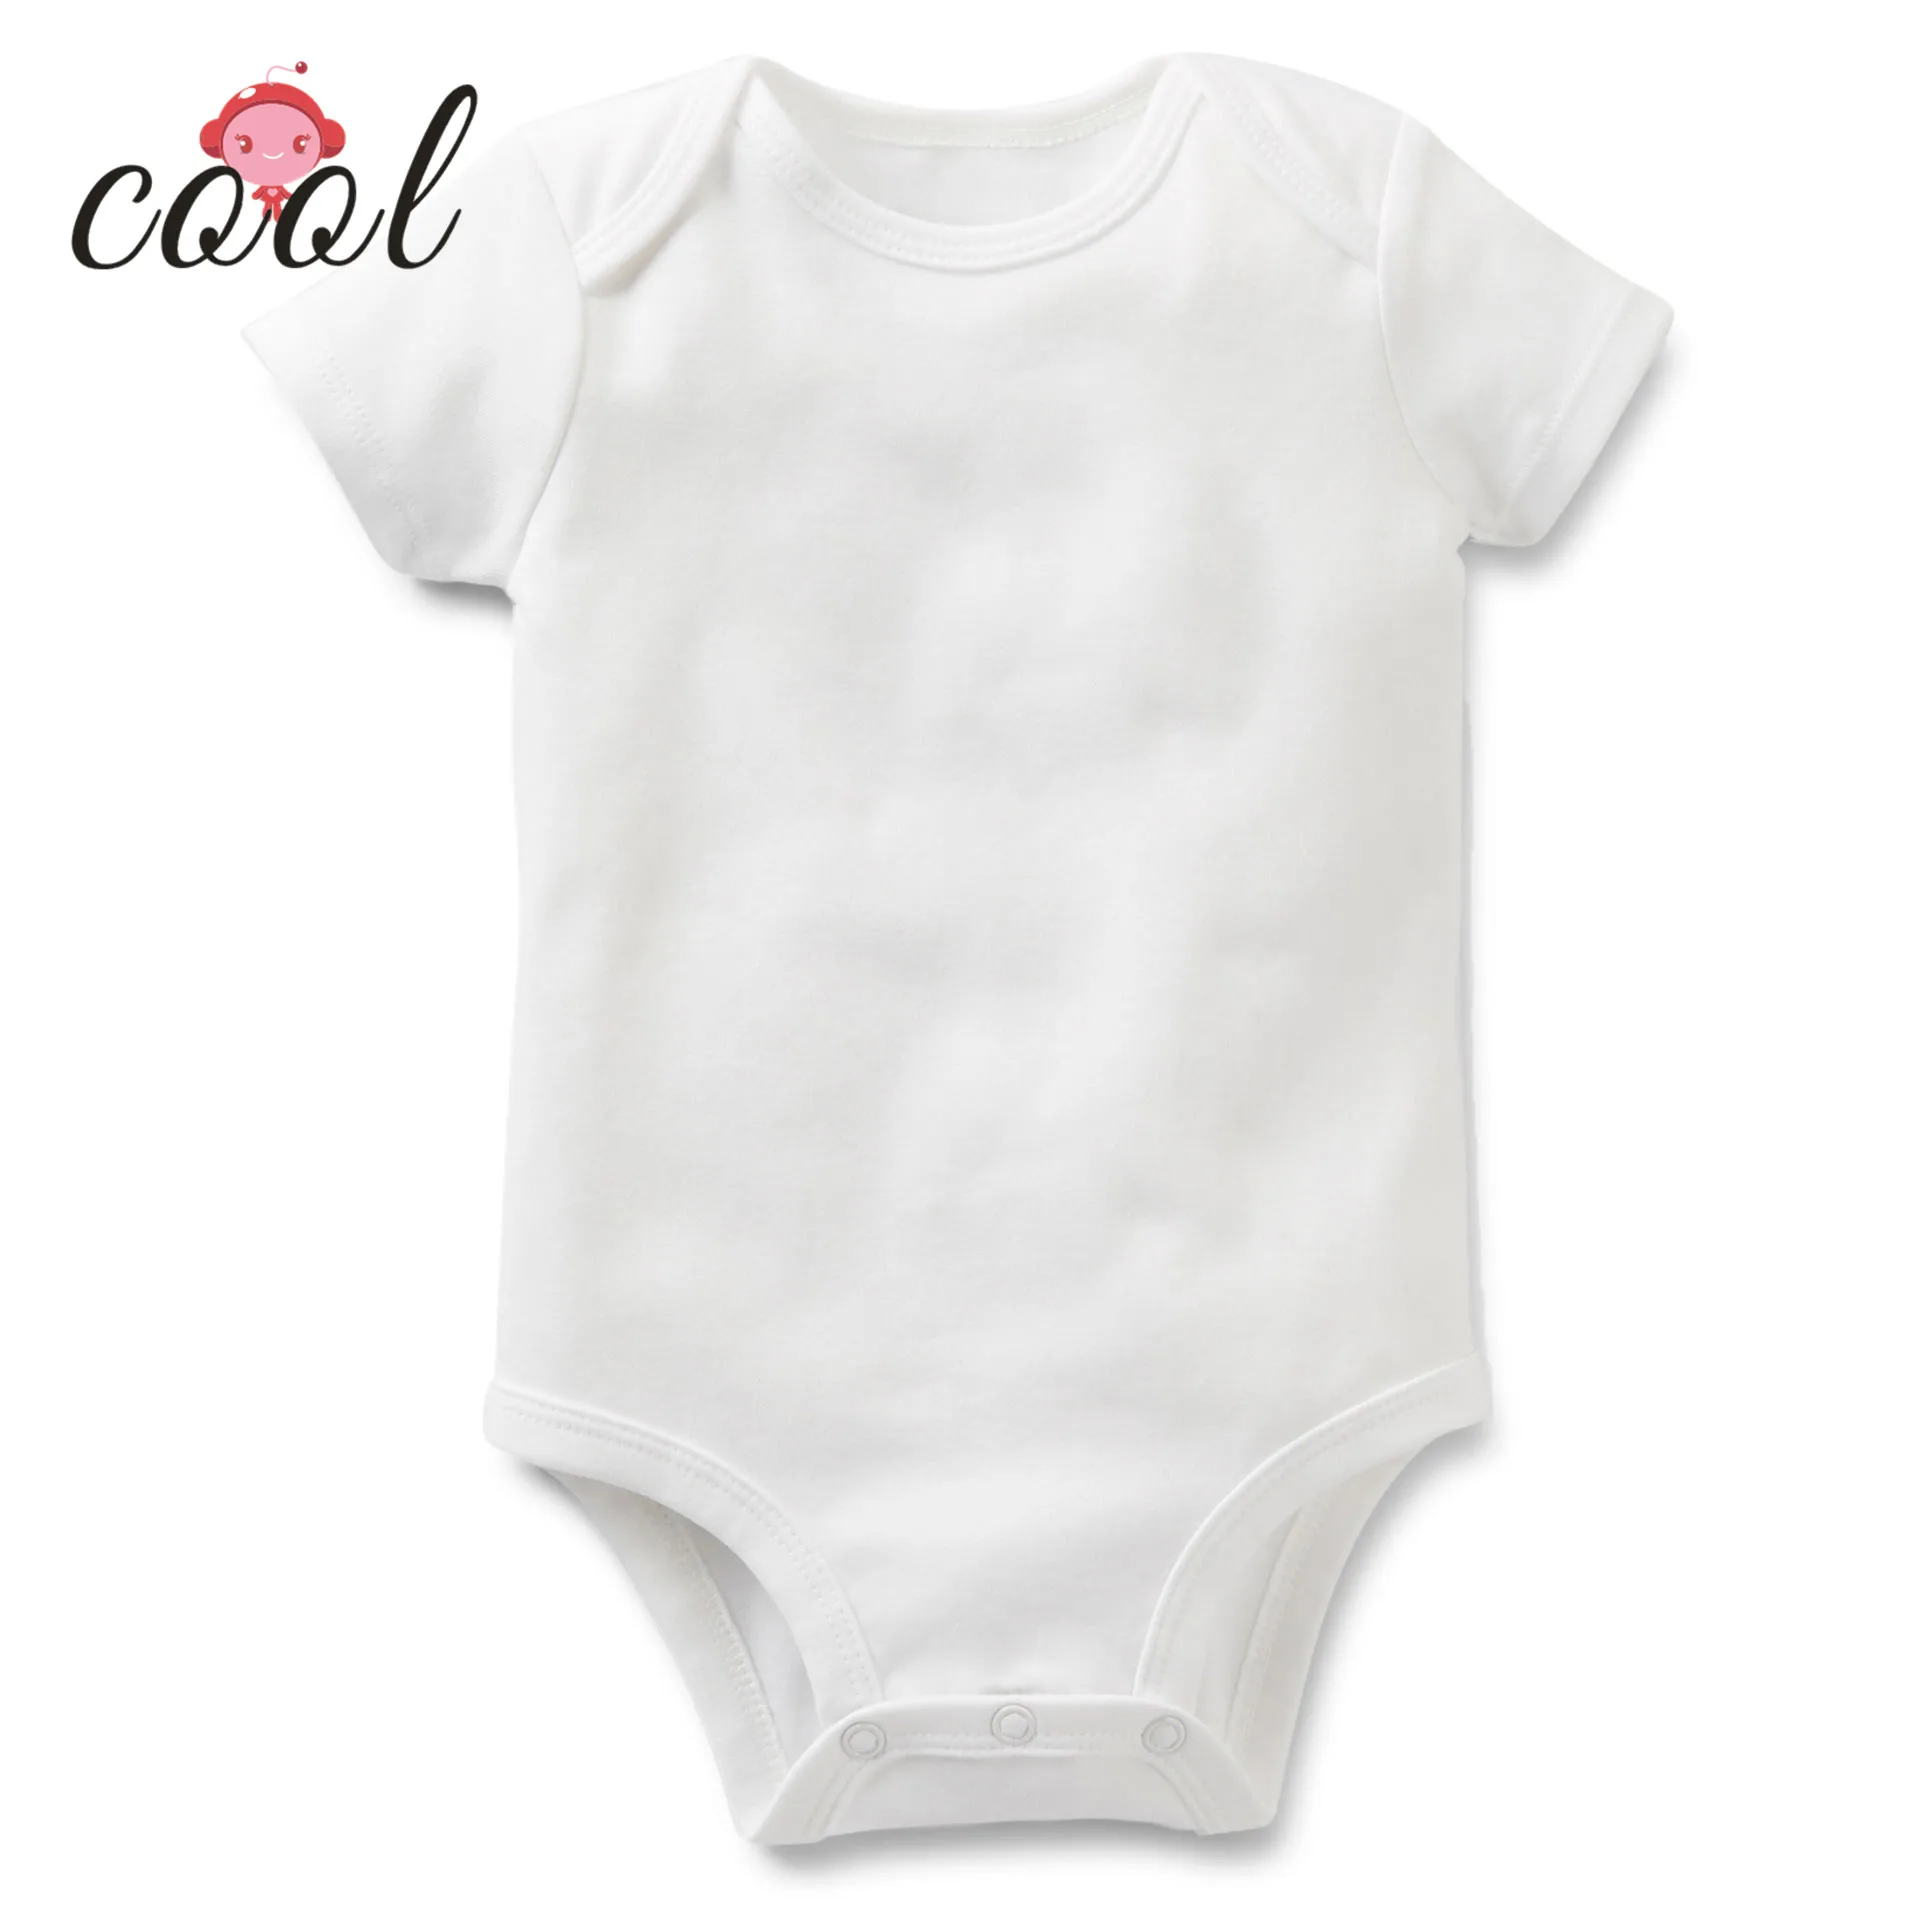 talla: 6-12 meses color: blanco para bebé niño Pelele para dormir Joha 